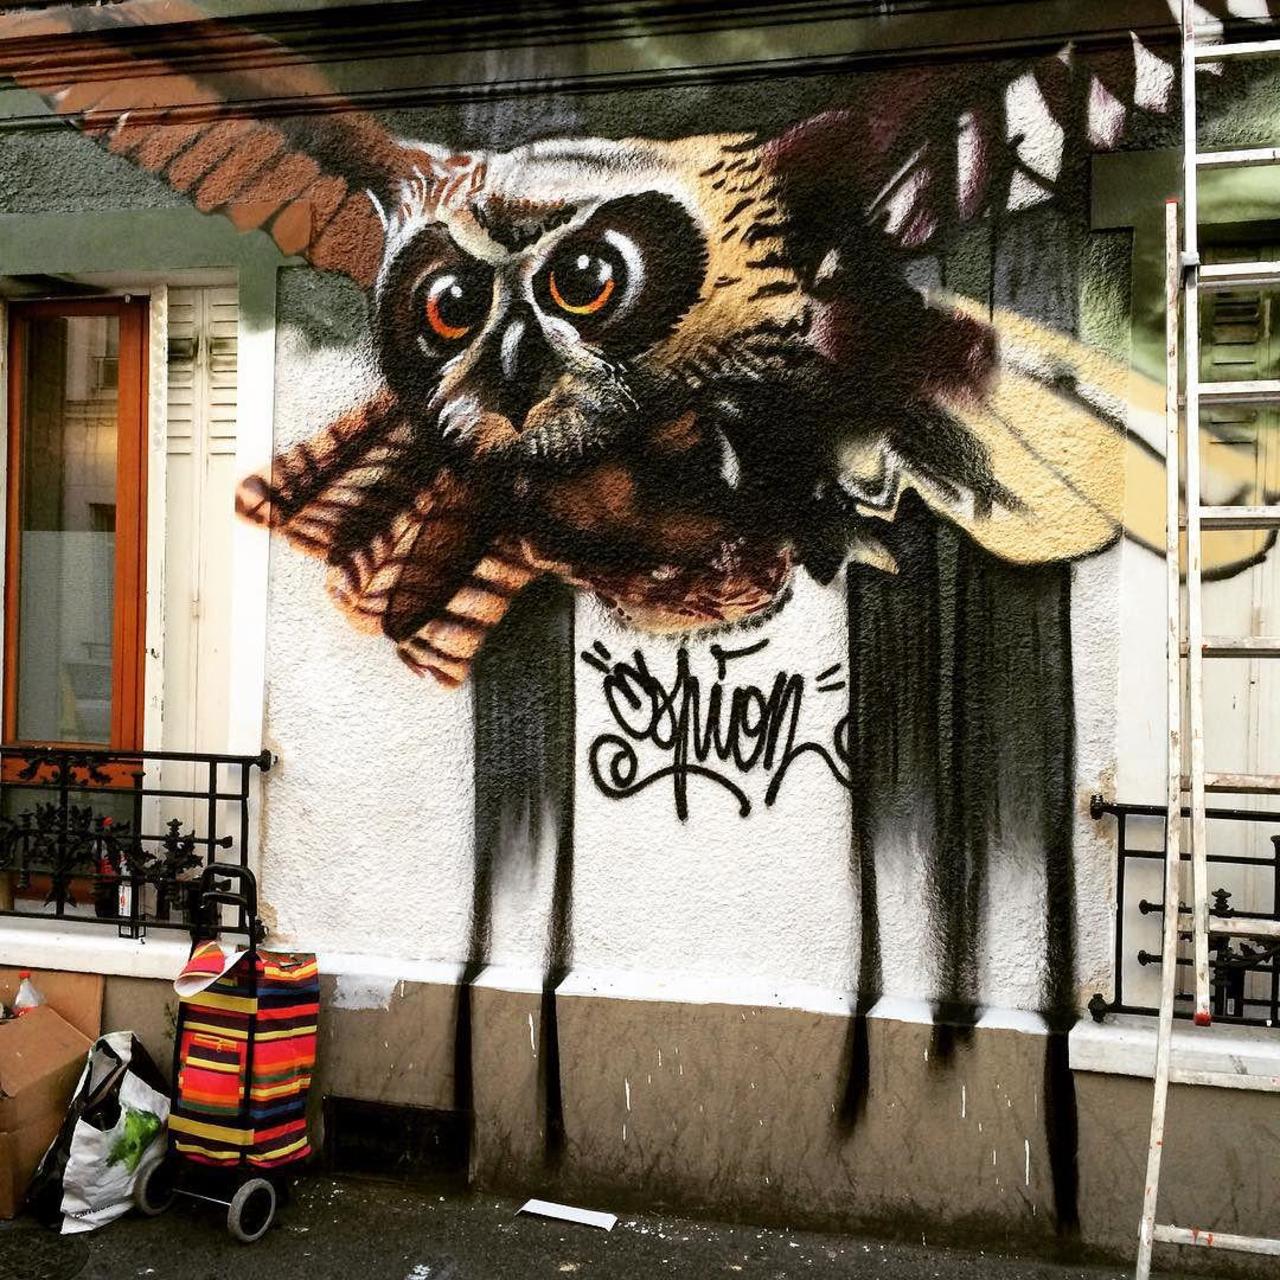 #Paris #graffiti photo by @elricoelmagnifico http://ift.tt/1PNUKb3 #StreetArt http://t.co/3V2QLinjtE